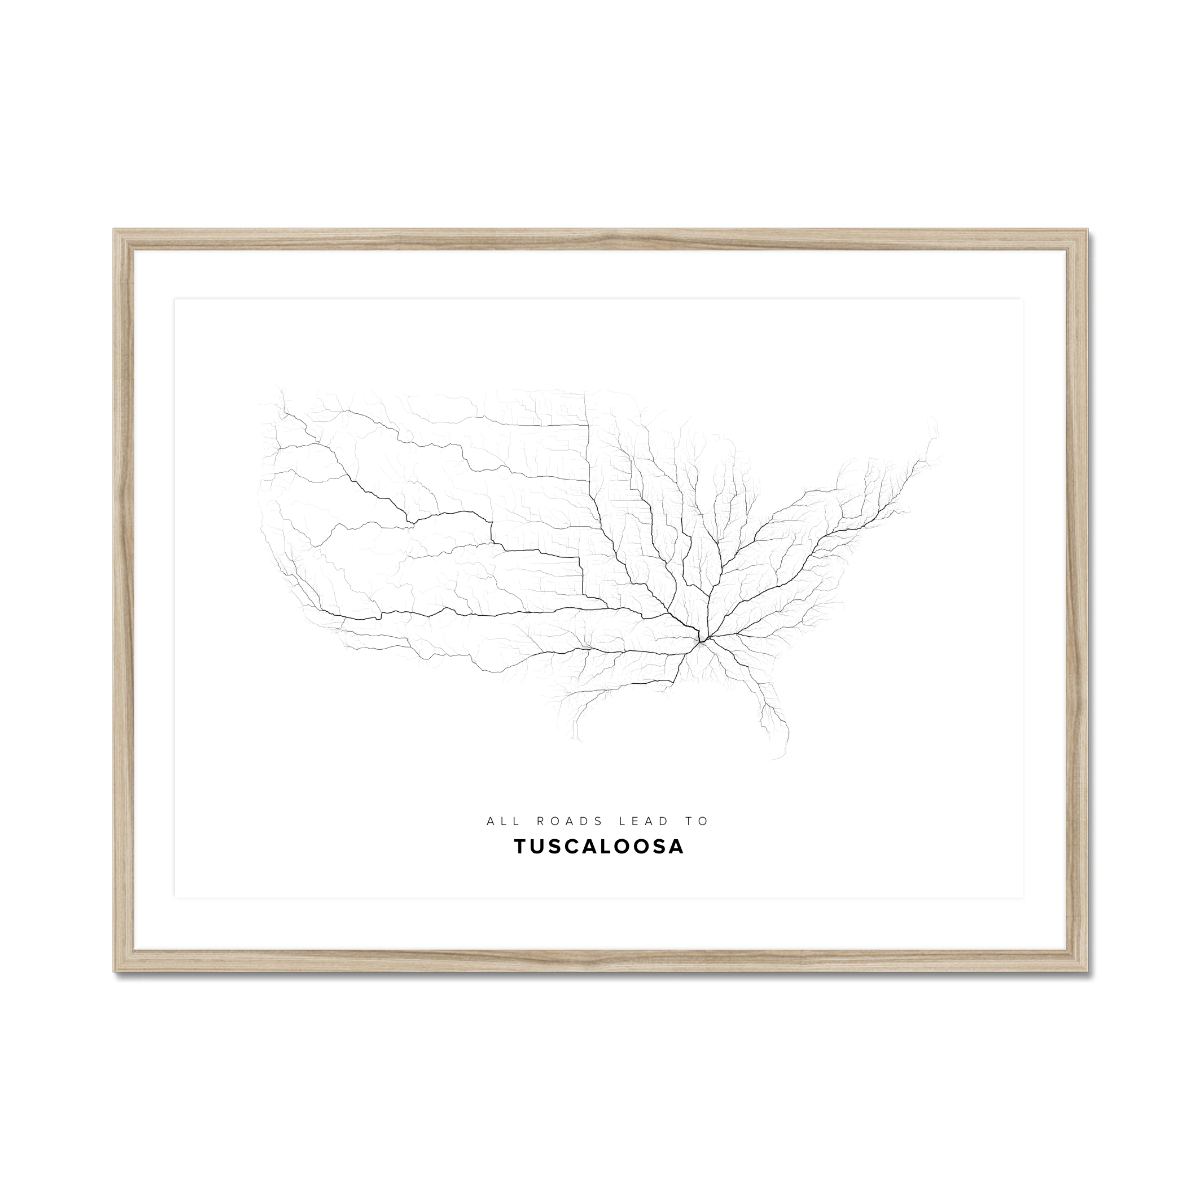 All roads lead to Tuscaloosa (United States of America) Fine Art Map Print